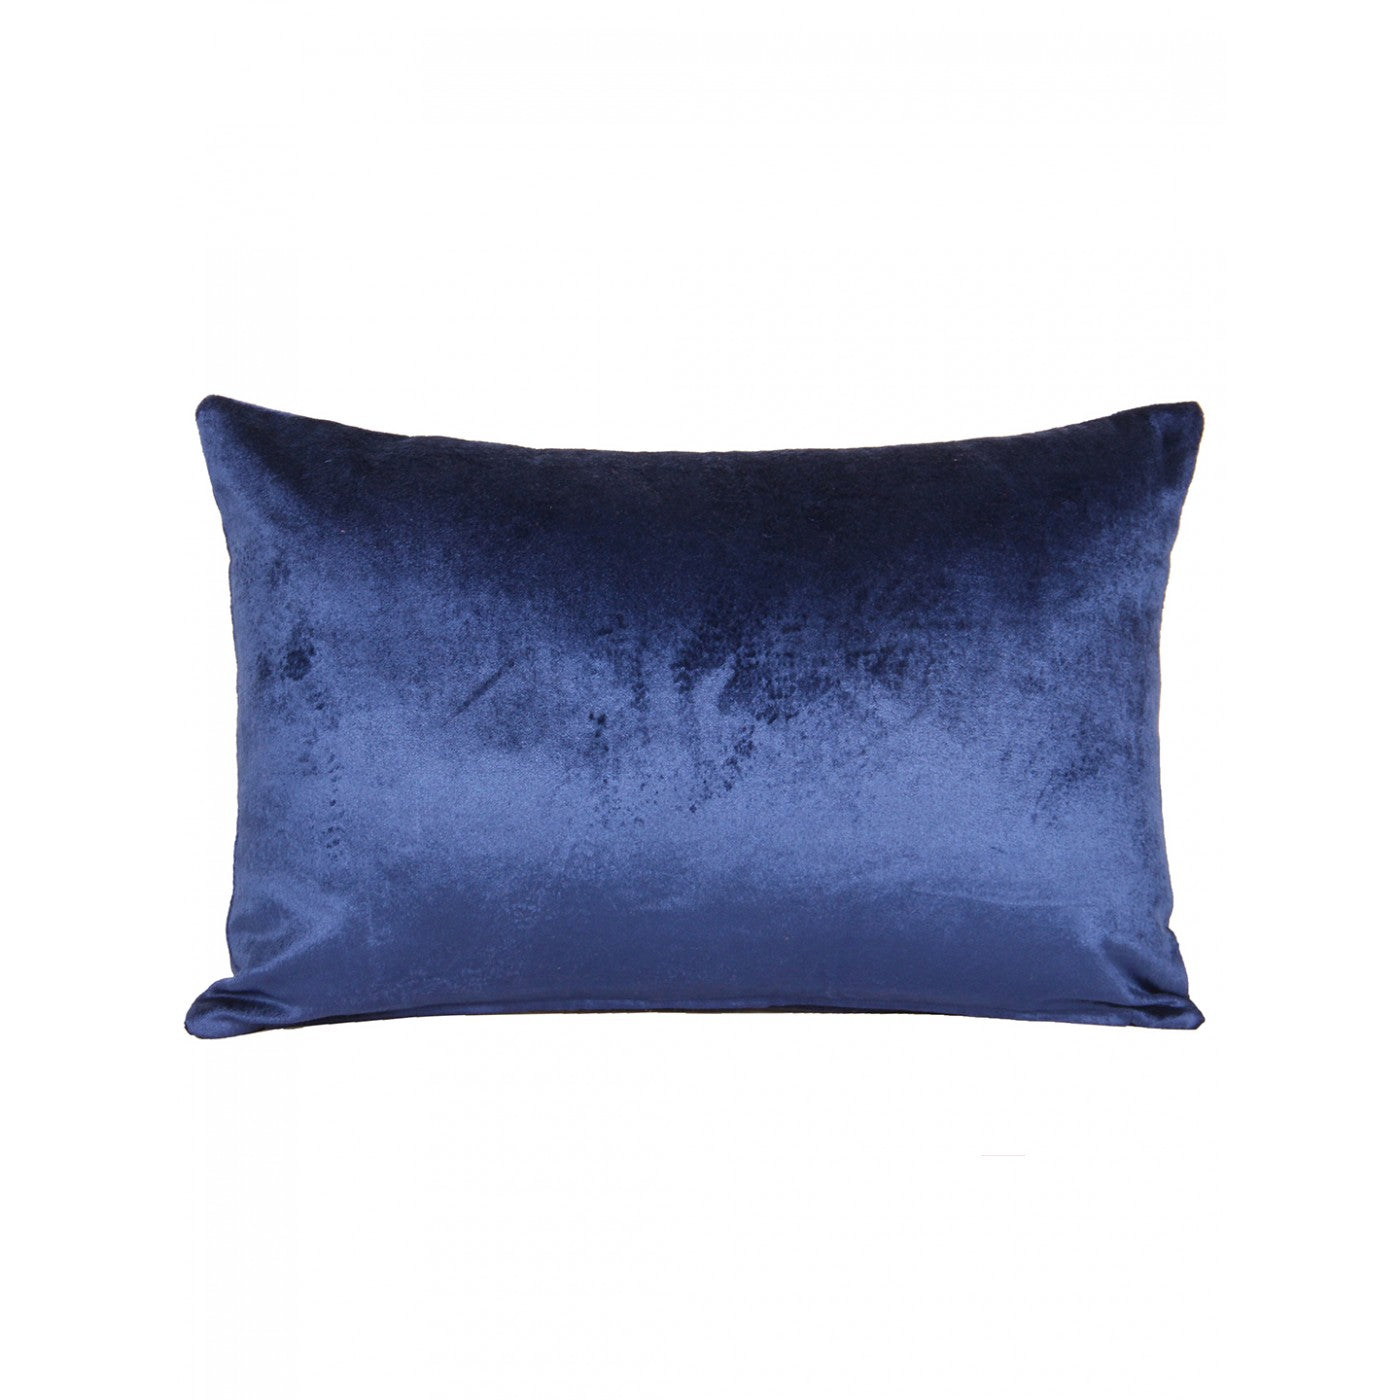 Oceanic Tapestry 12x18 Inch Embroidered Blue Velvet Cushion Cover